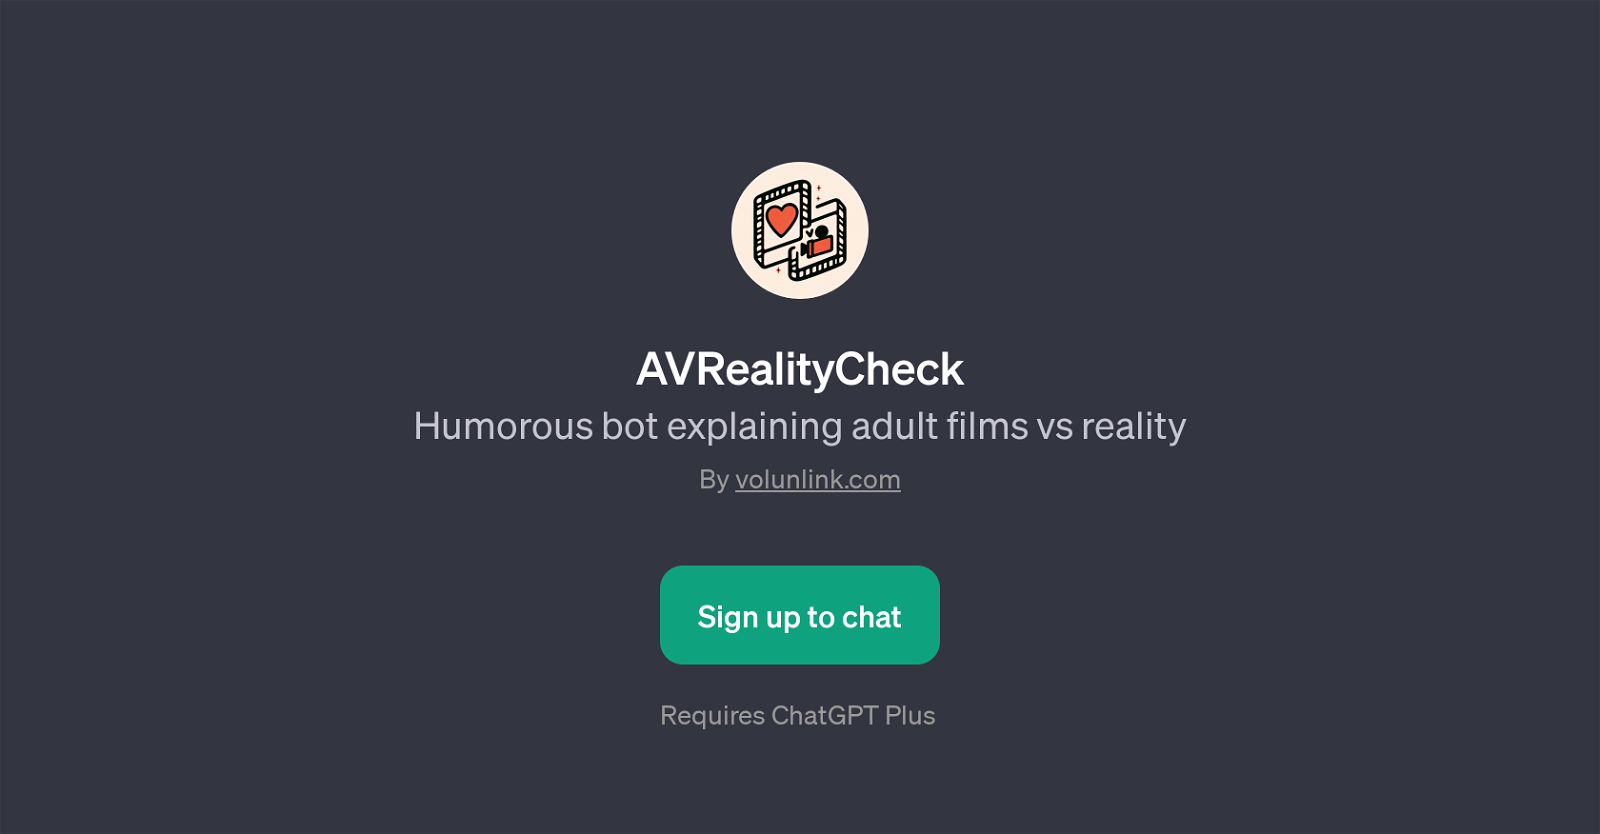 AVRealityCheck website